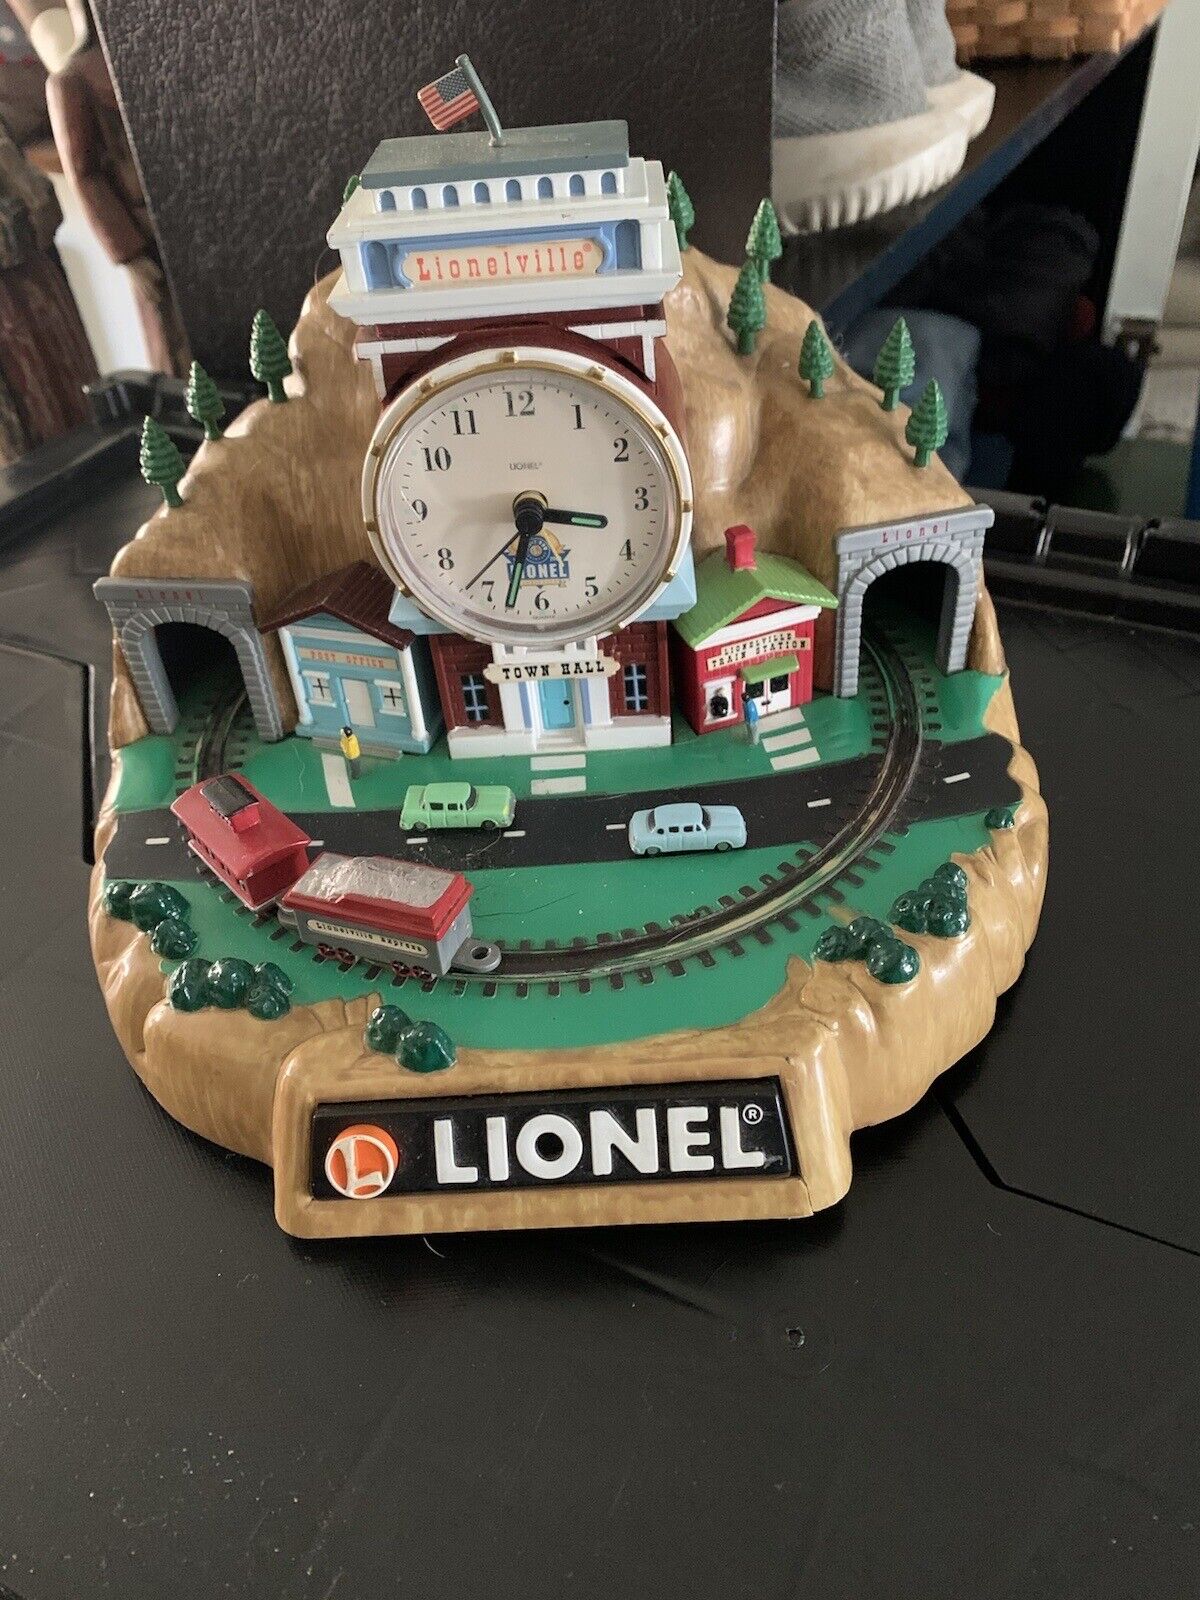 Lionel 100th Anniversary Lionelville Railroad Station Alarm Clock w/Trains